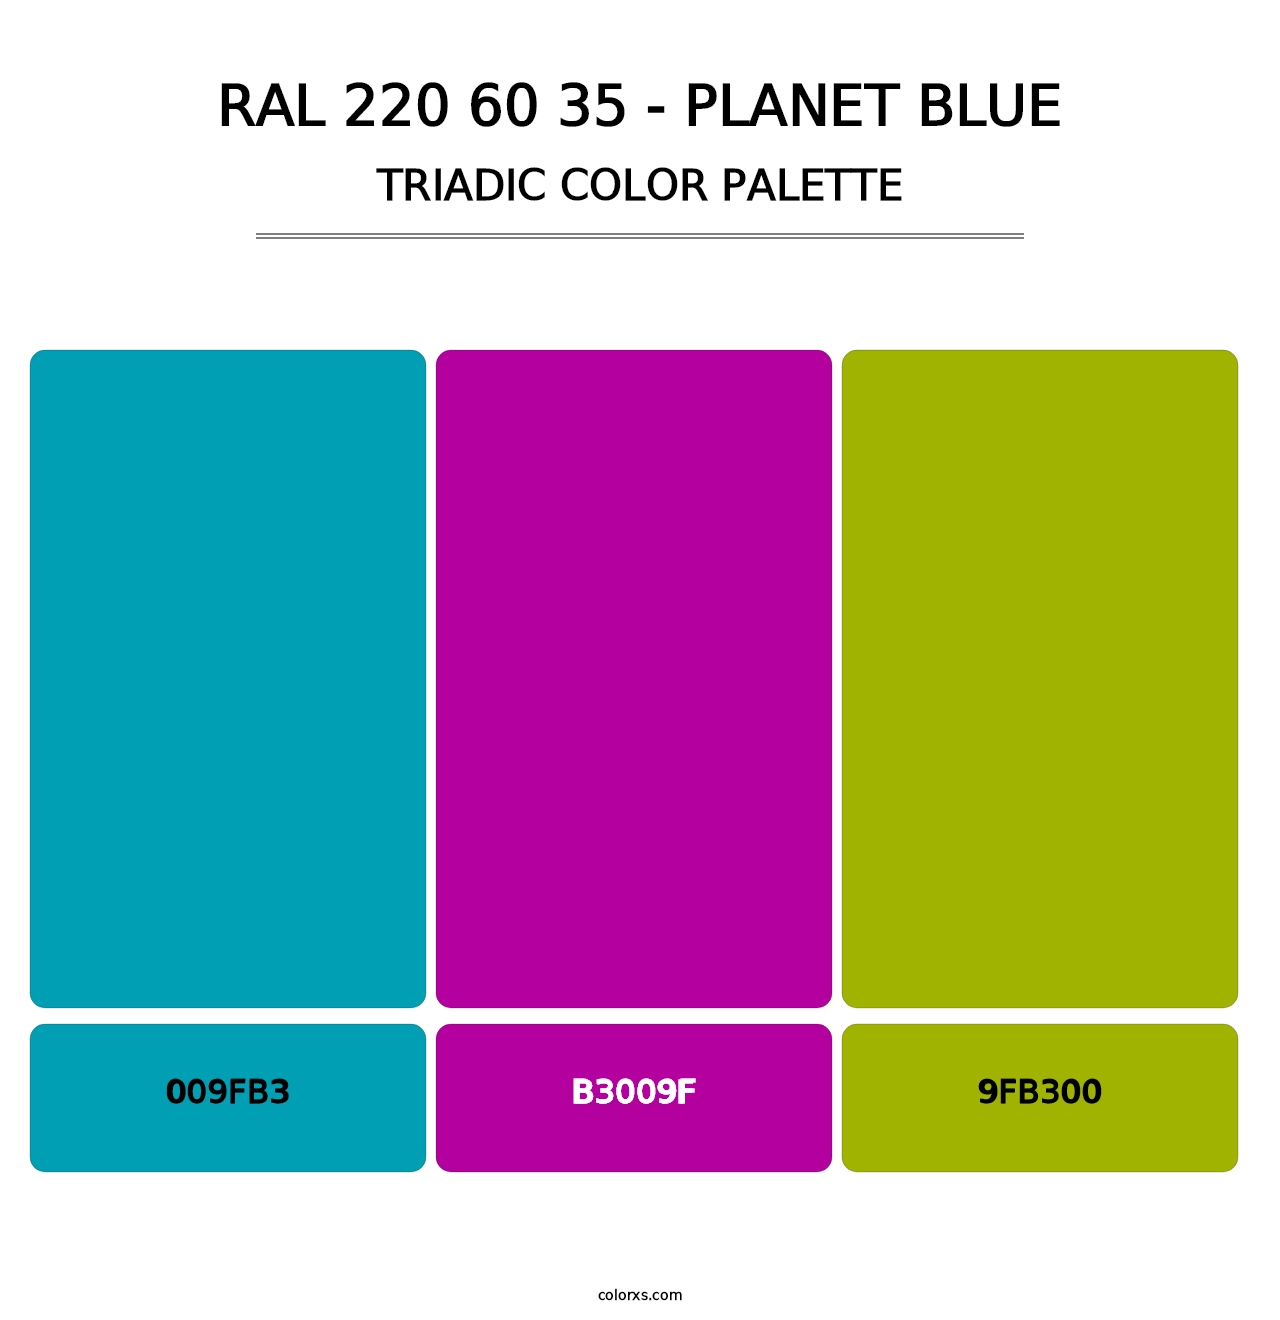 RAL 220 60 35 - Planet Blue - Triadic Color Palette